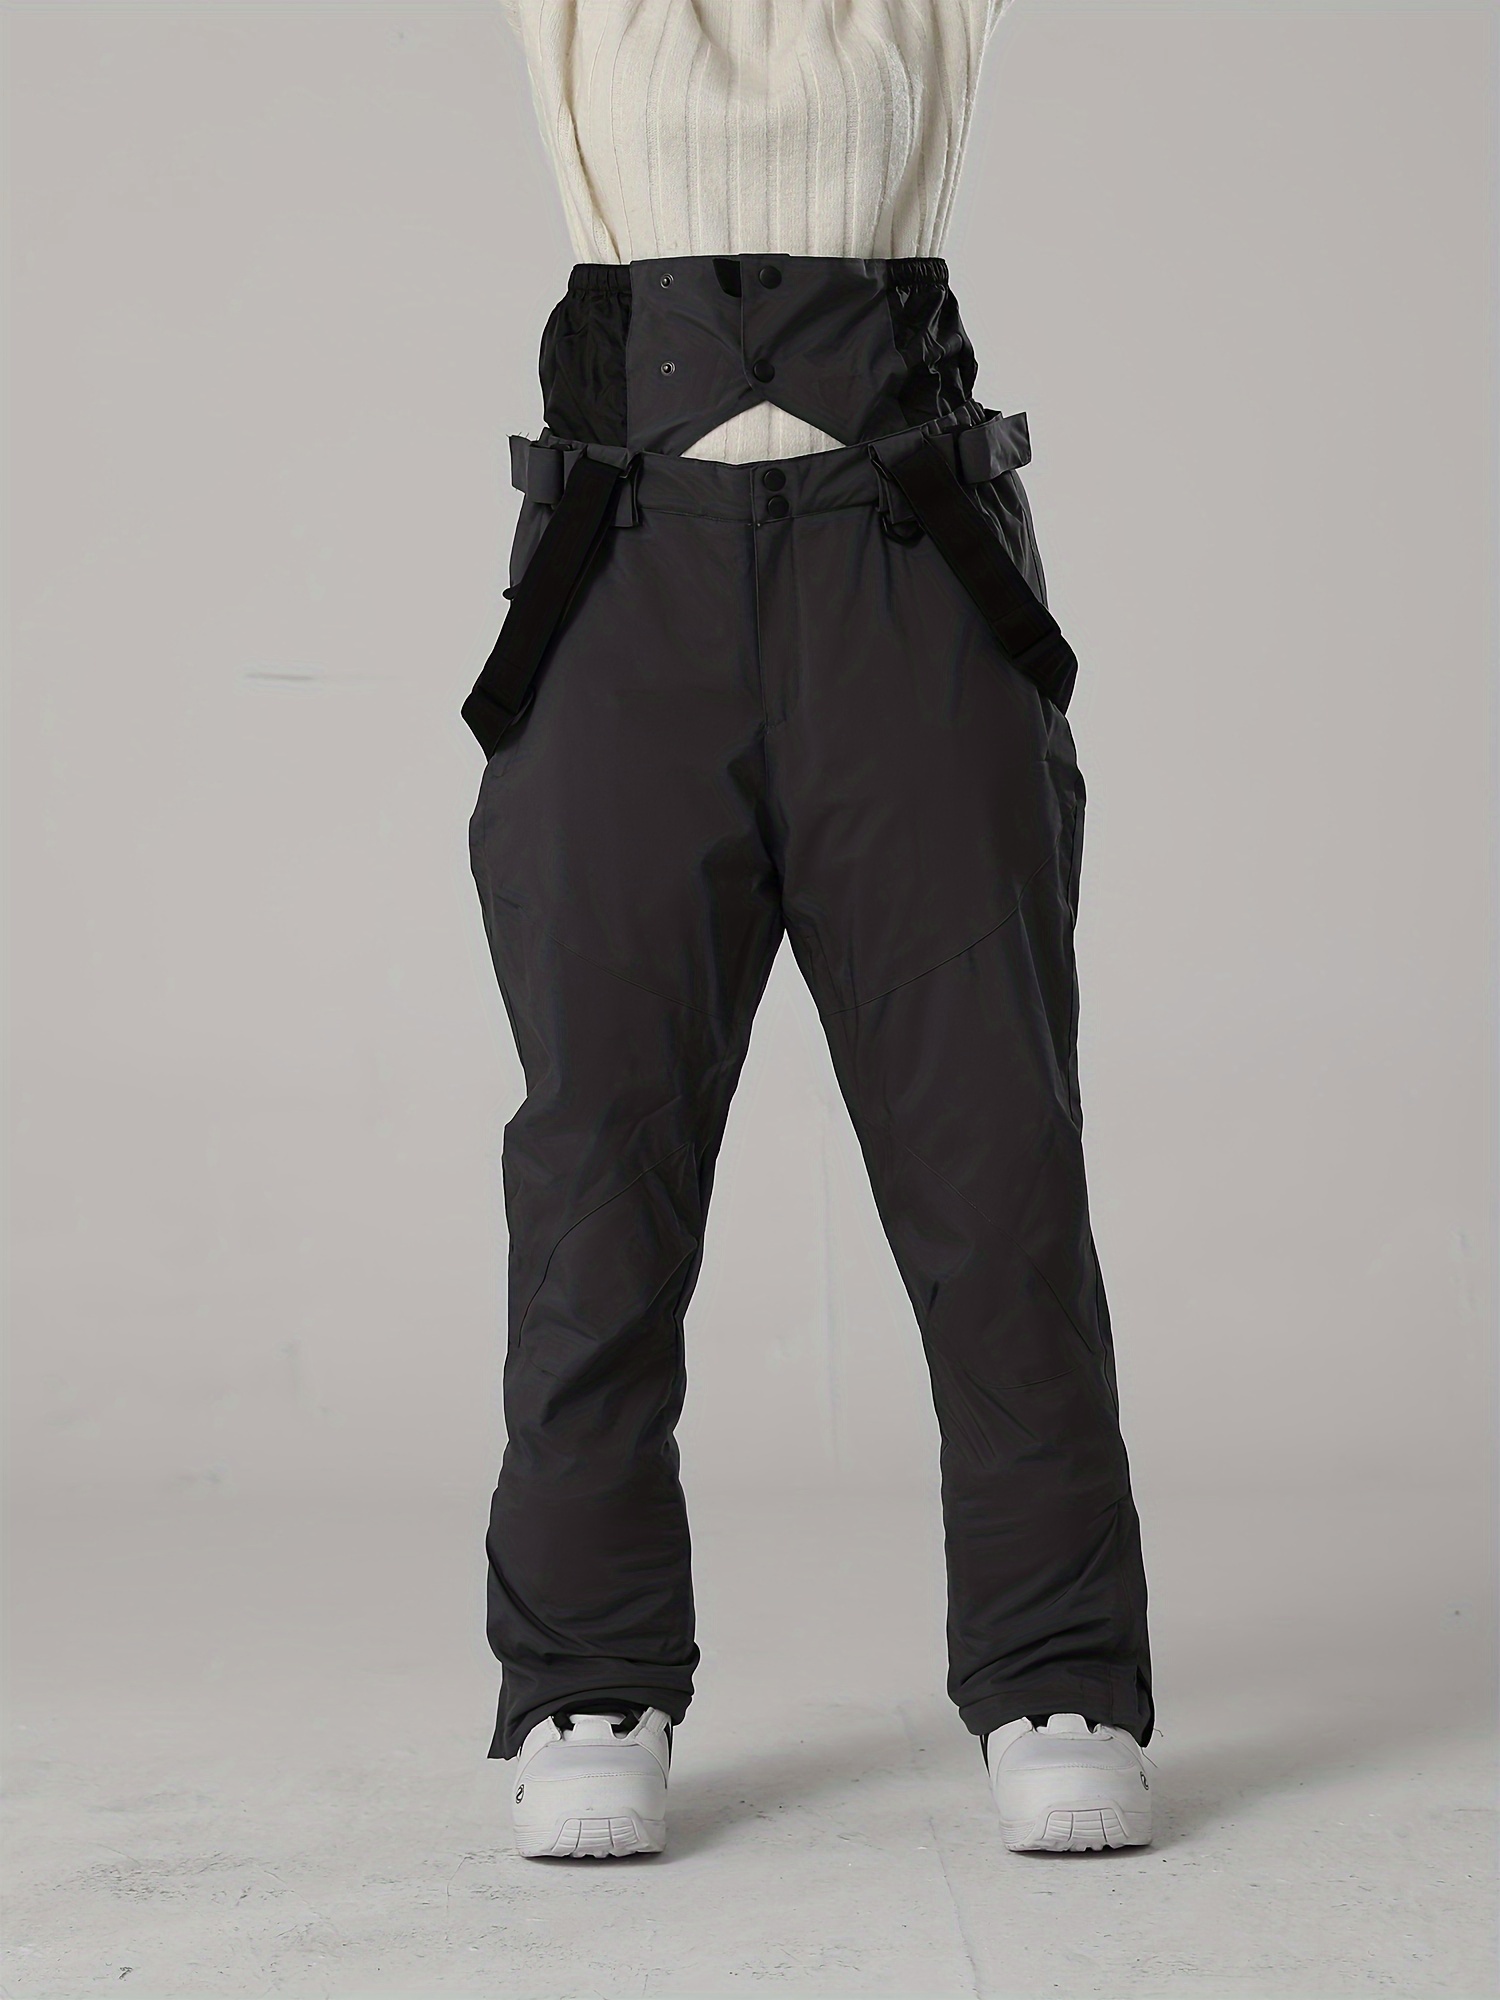 Baohd Ski Bib Insulated Pants Sled trousers insulated plus windproof warm  trousers Winter snow Skiing Warm Winter Full Length Windproof Women XL